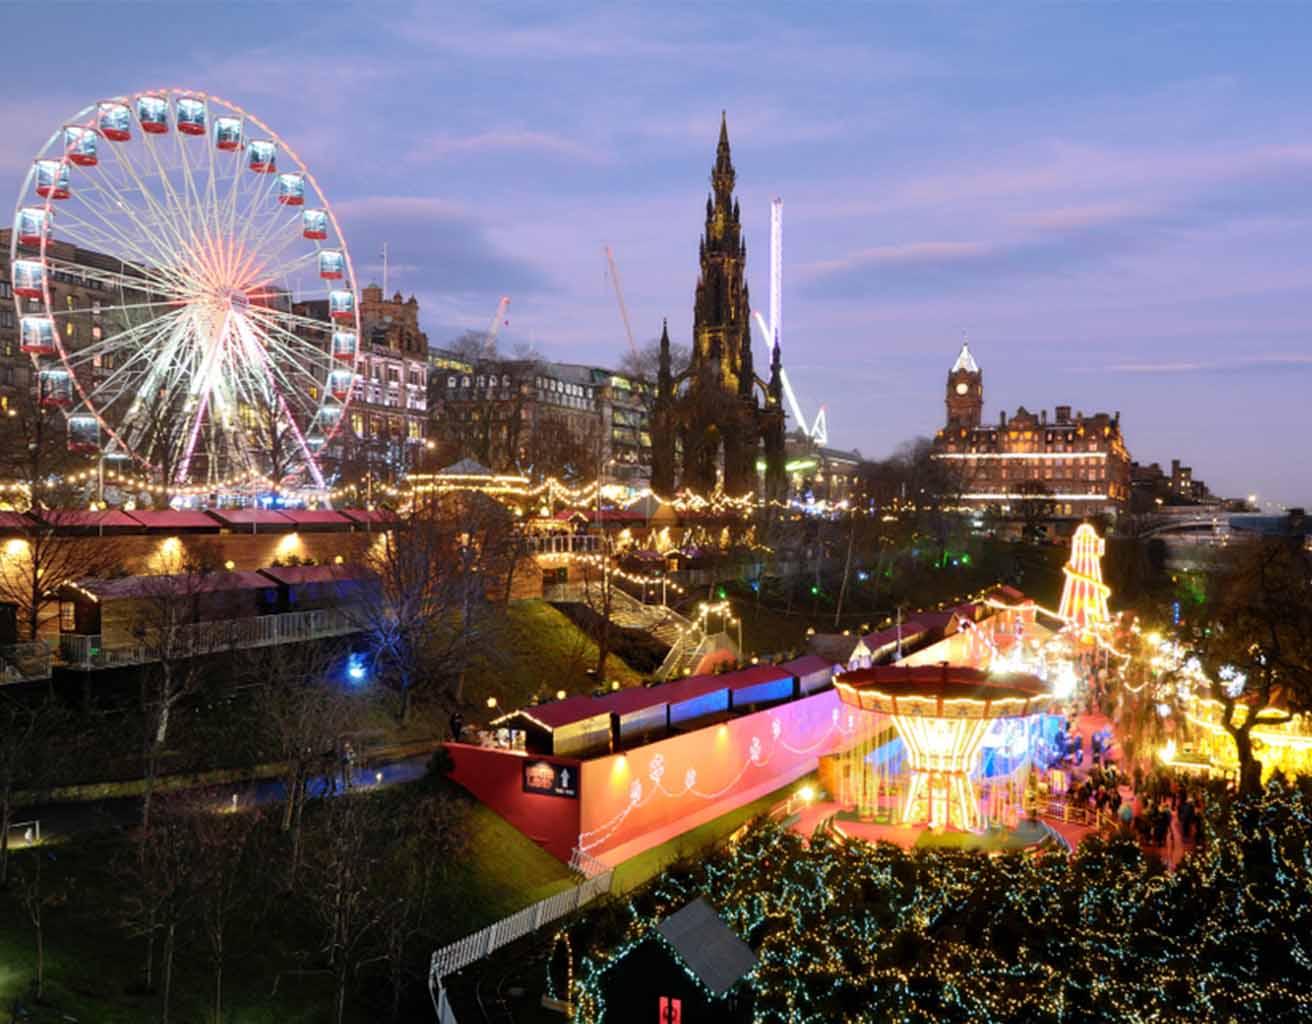 The Edinburgh Christmas Market and ferriswheel.